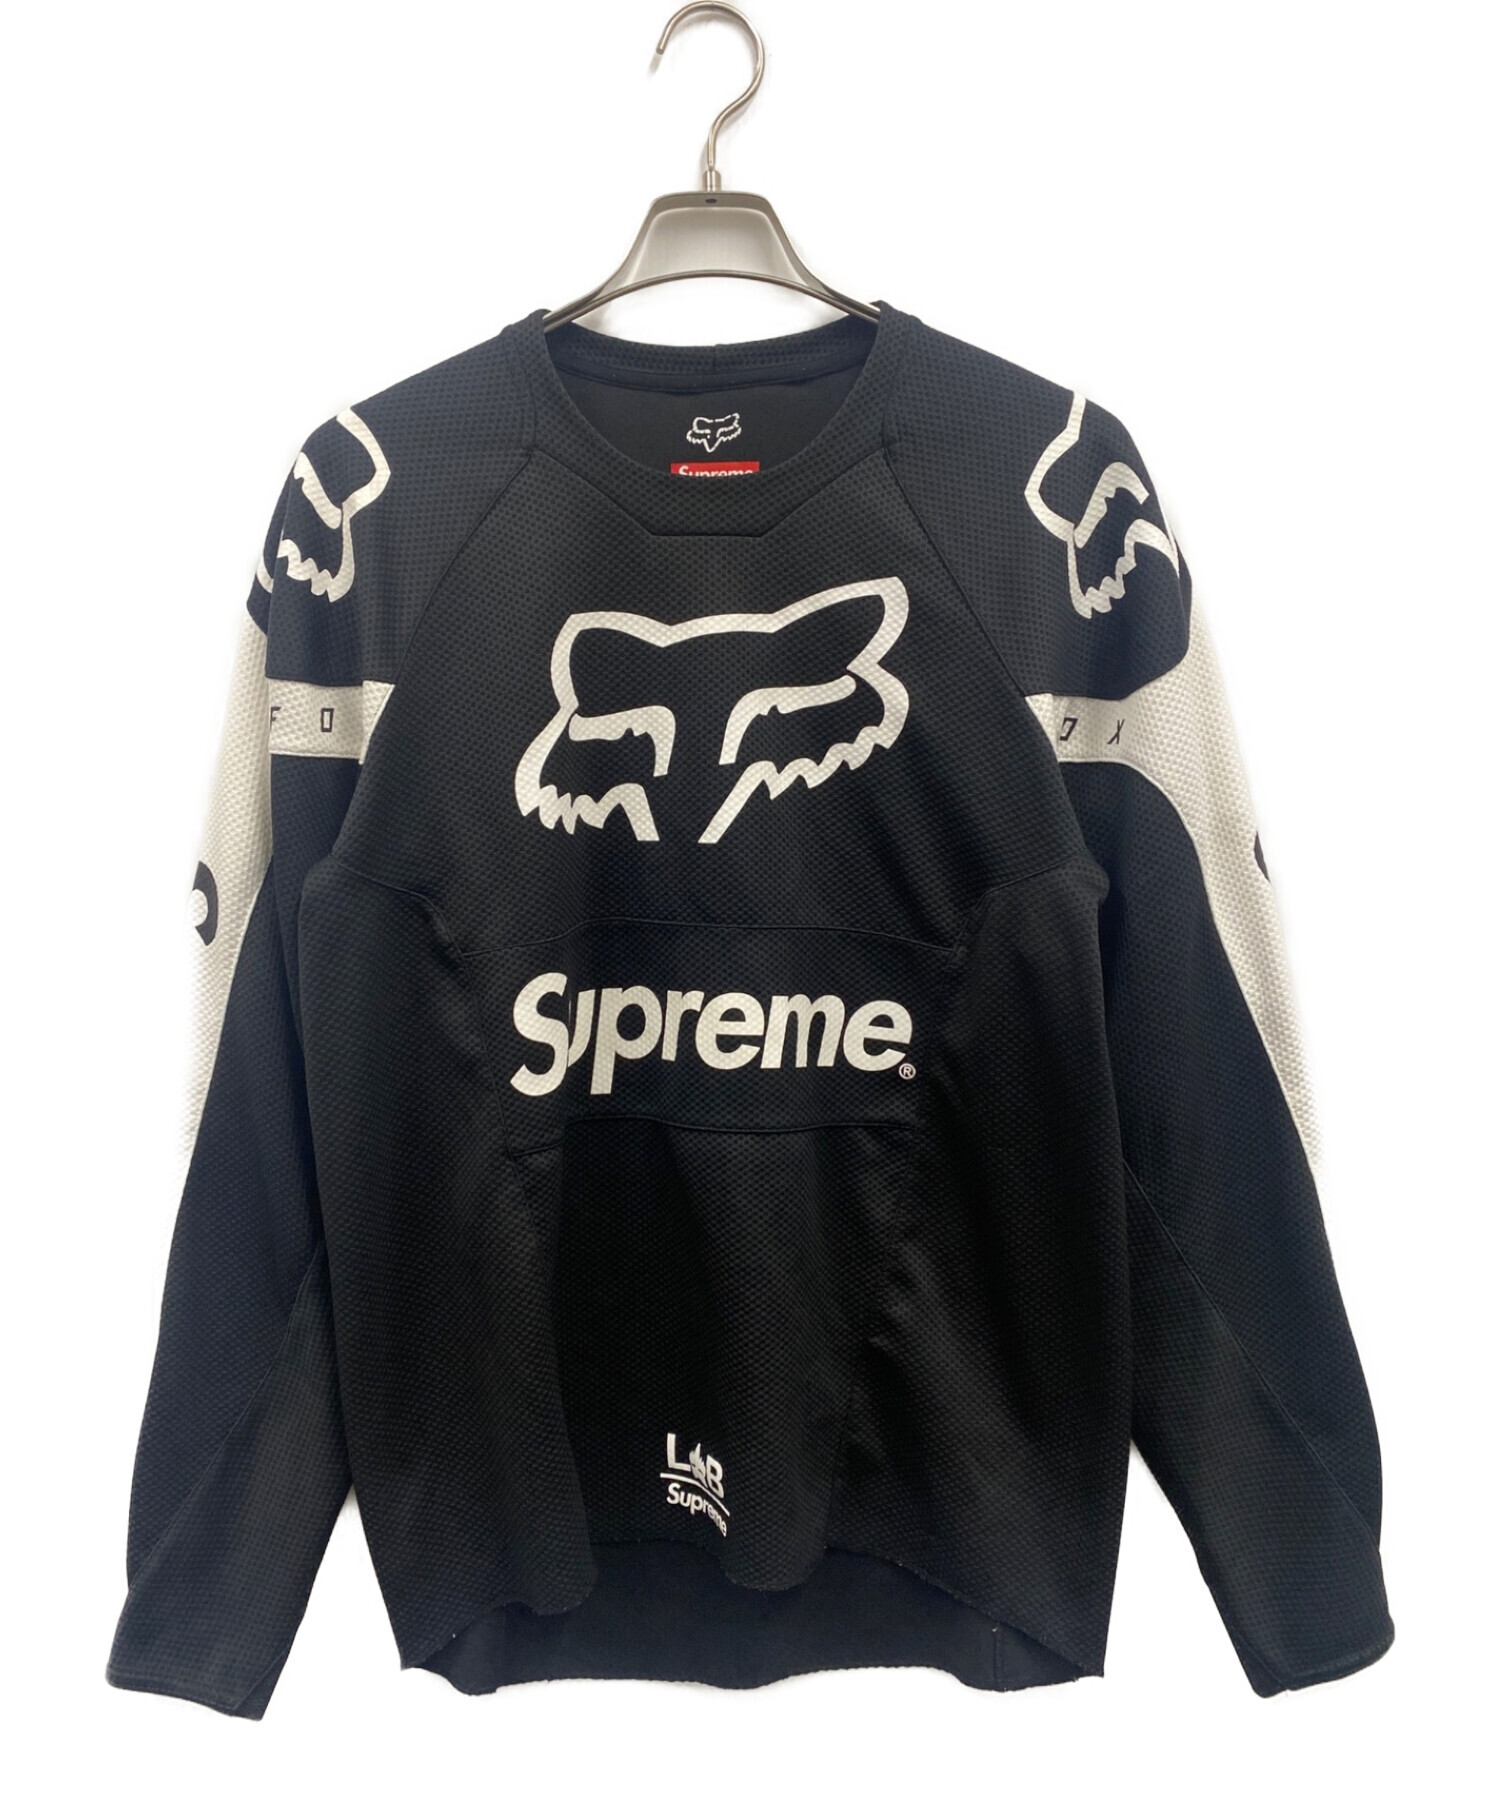 supreme fox racing moto jersey m